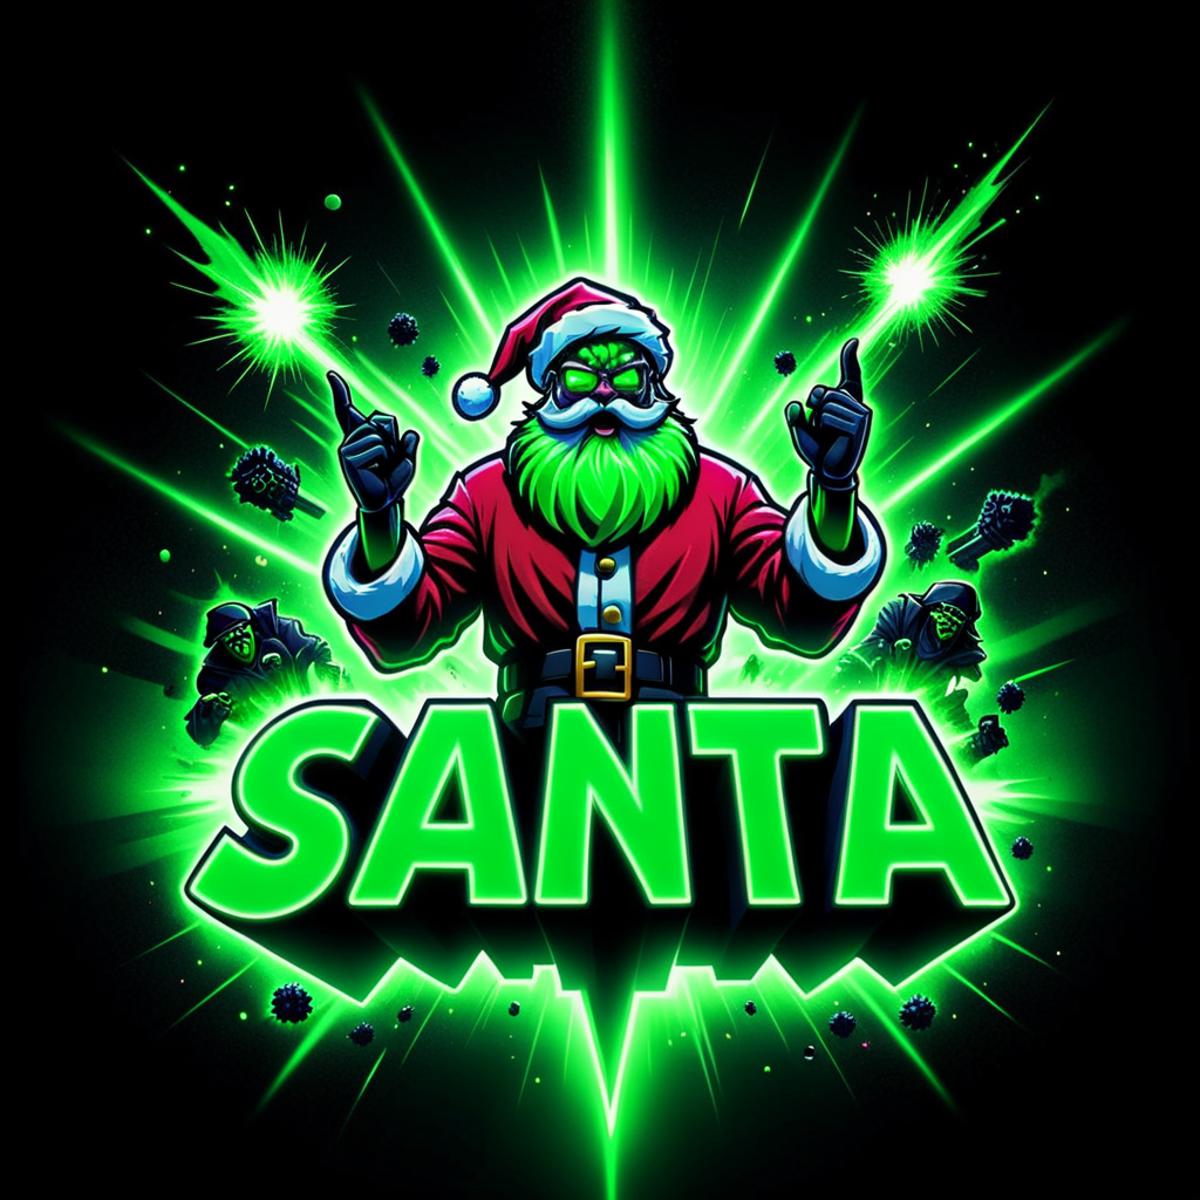 AI Overlord Santas - The Green Team LoRA image by DazMakeArt